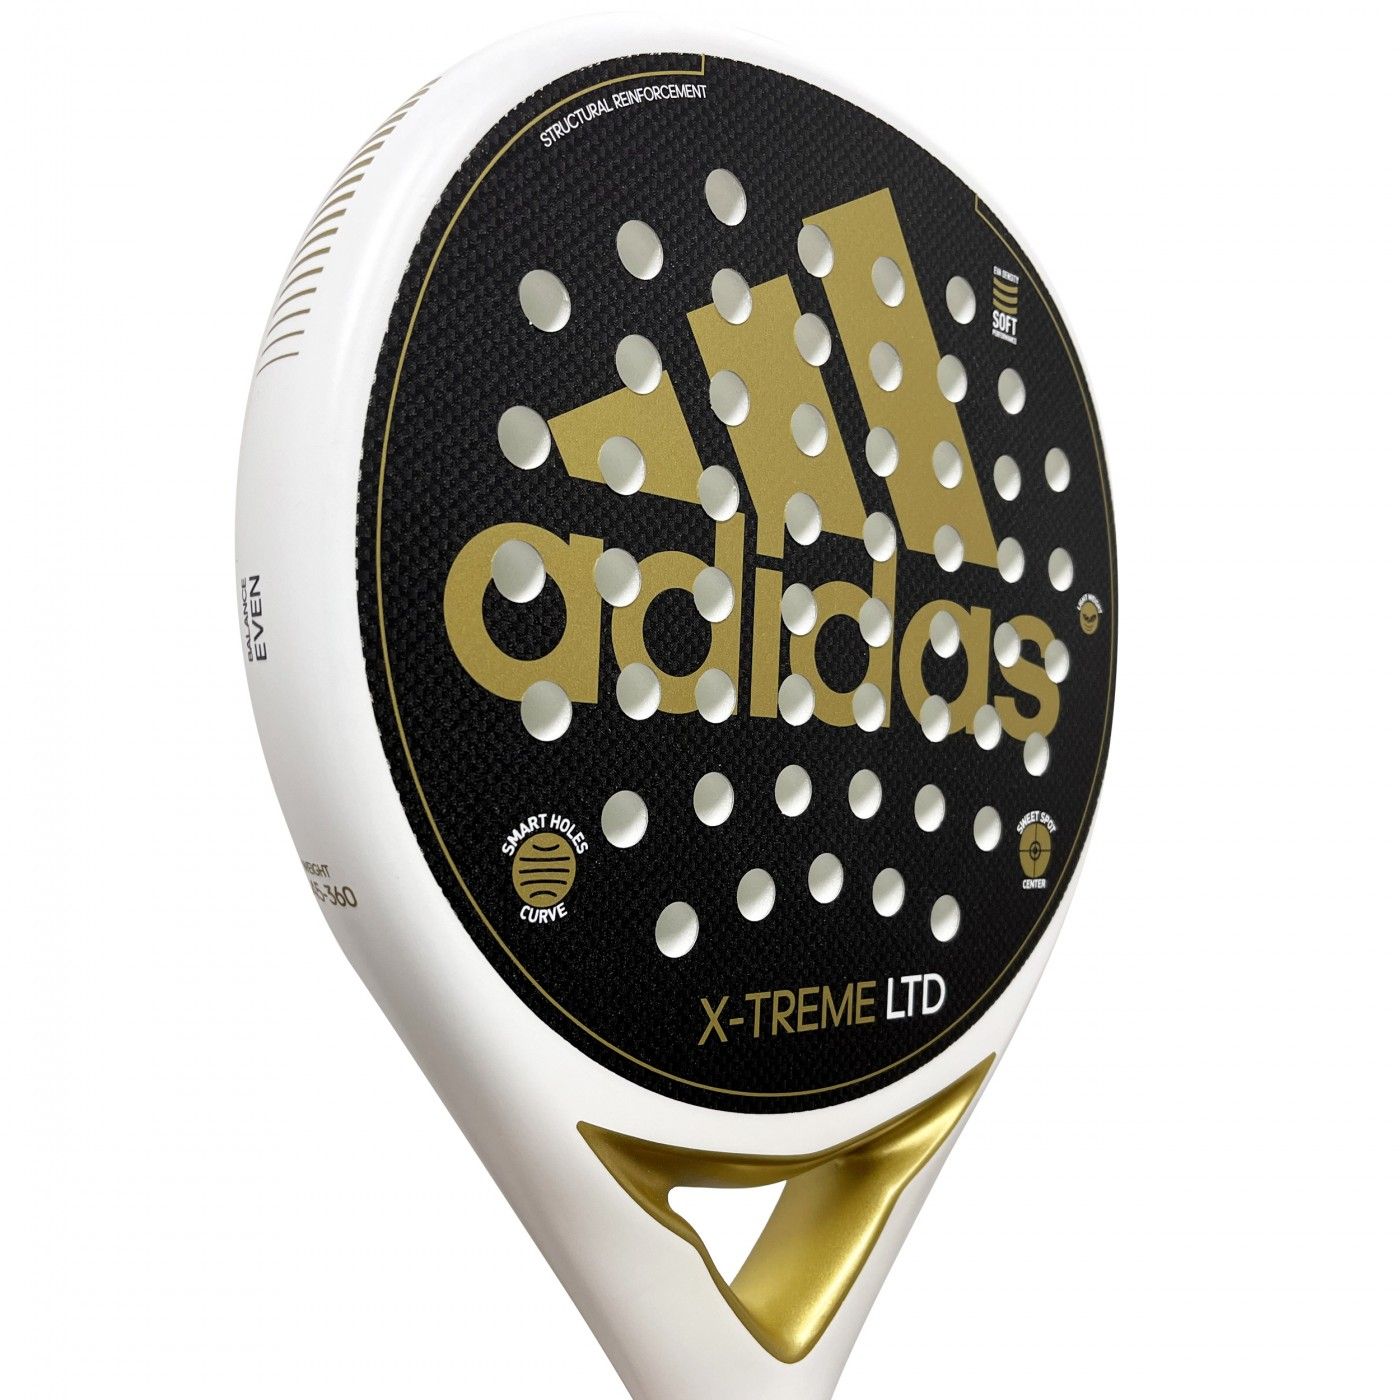 Adidas X-Treme LTD White / Gold De